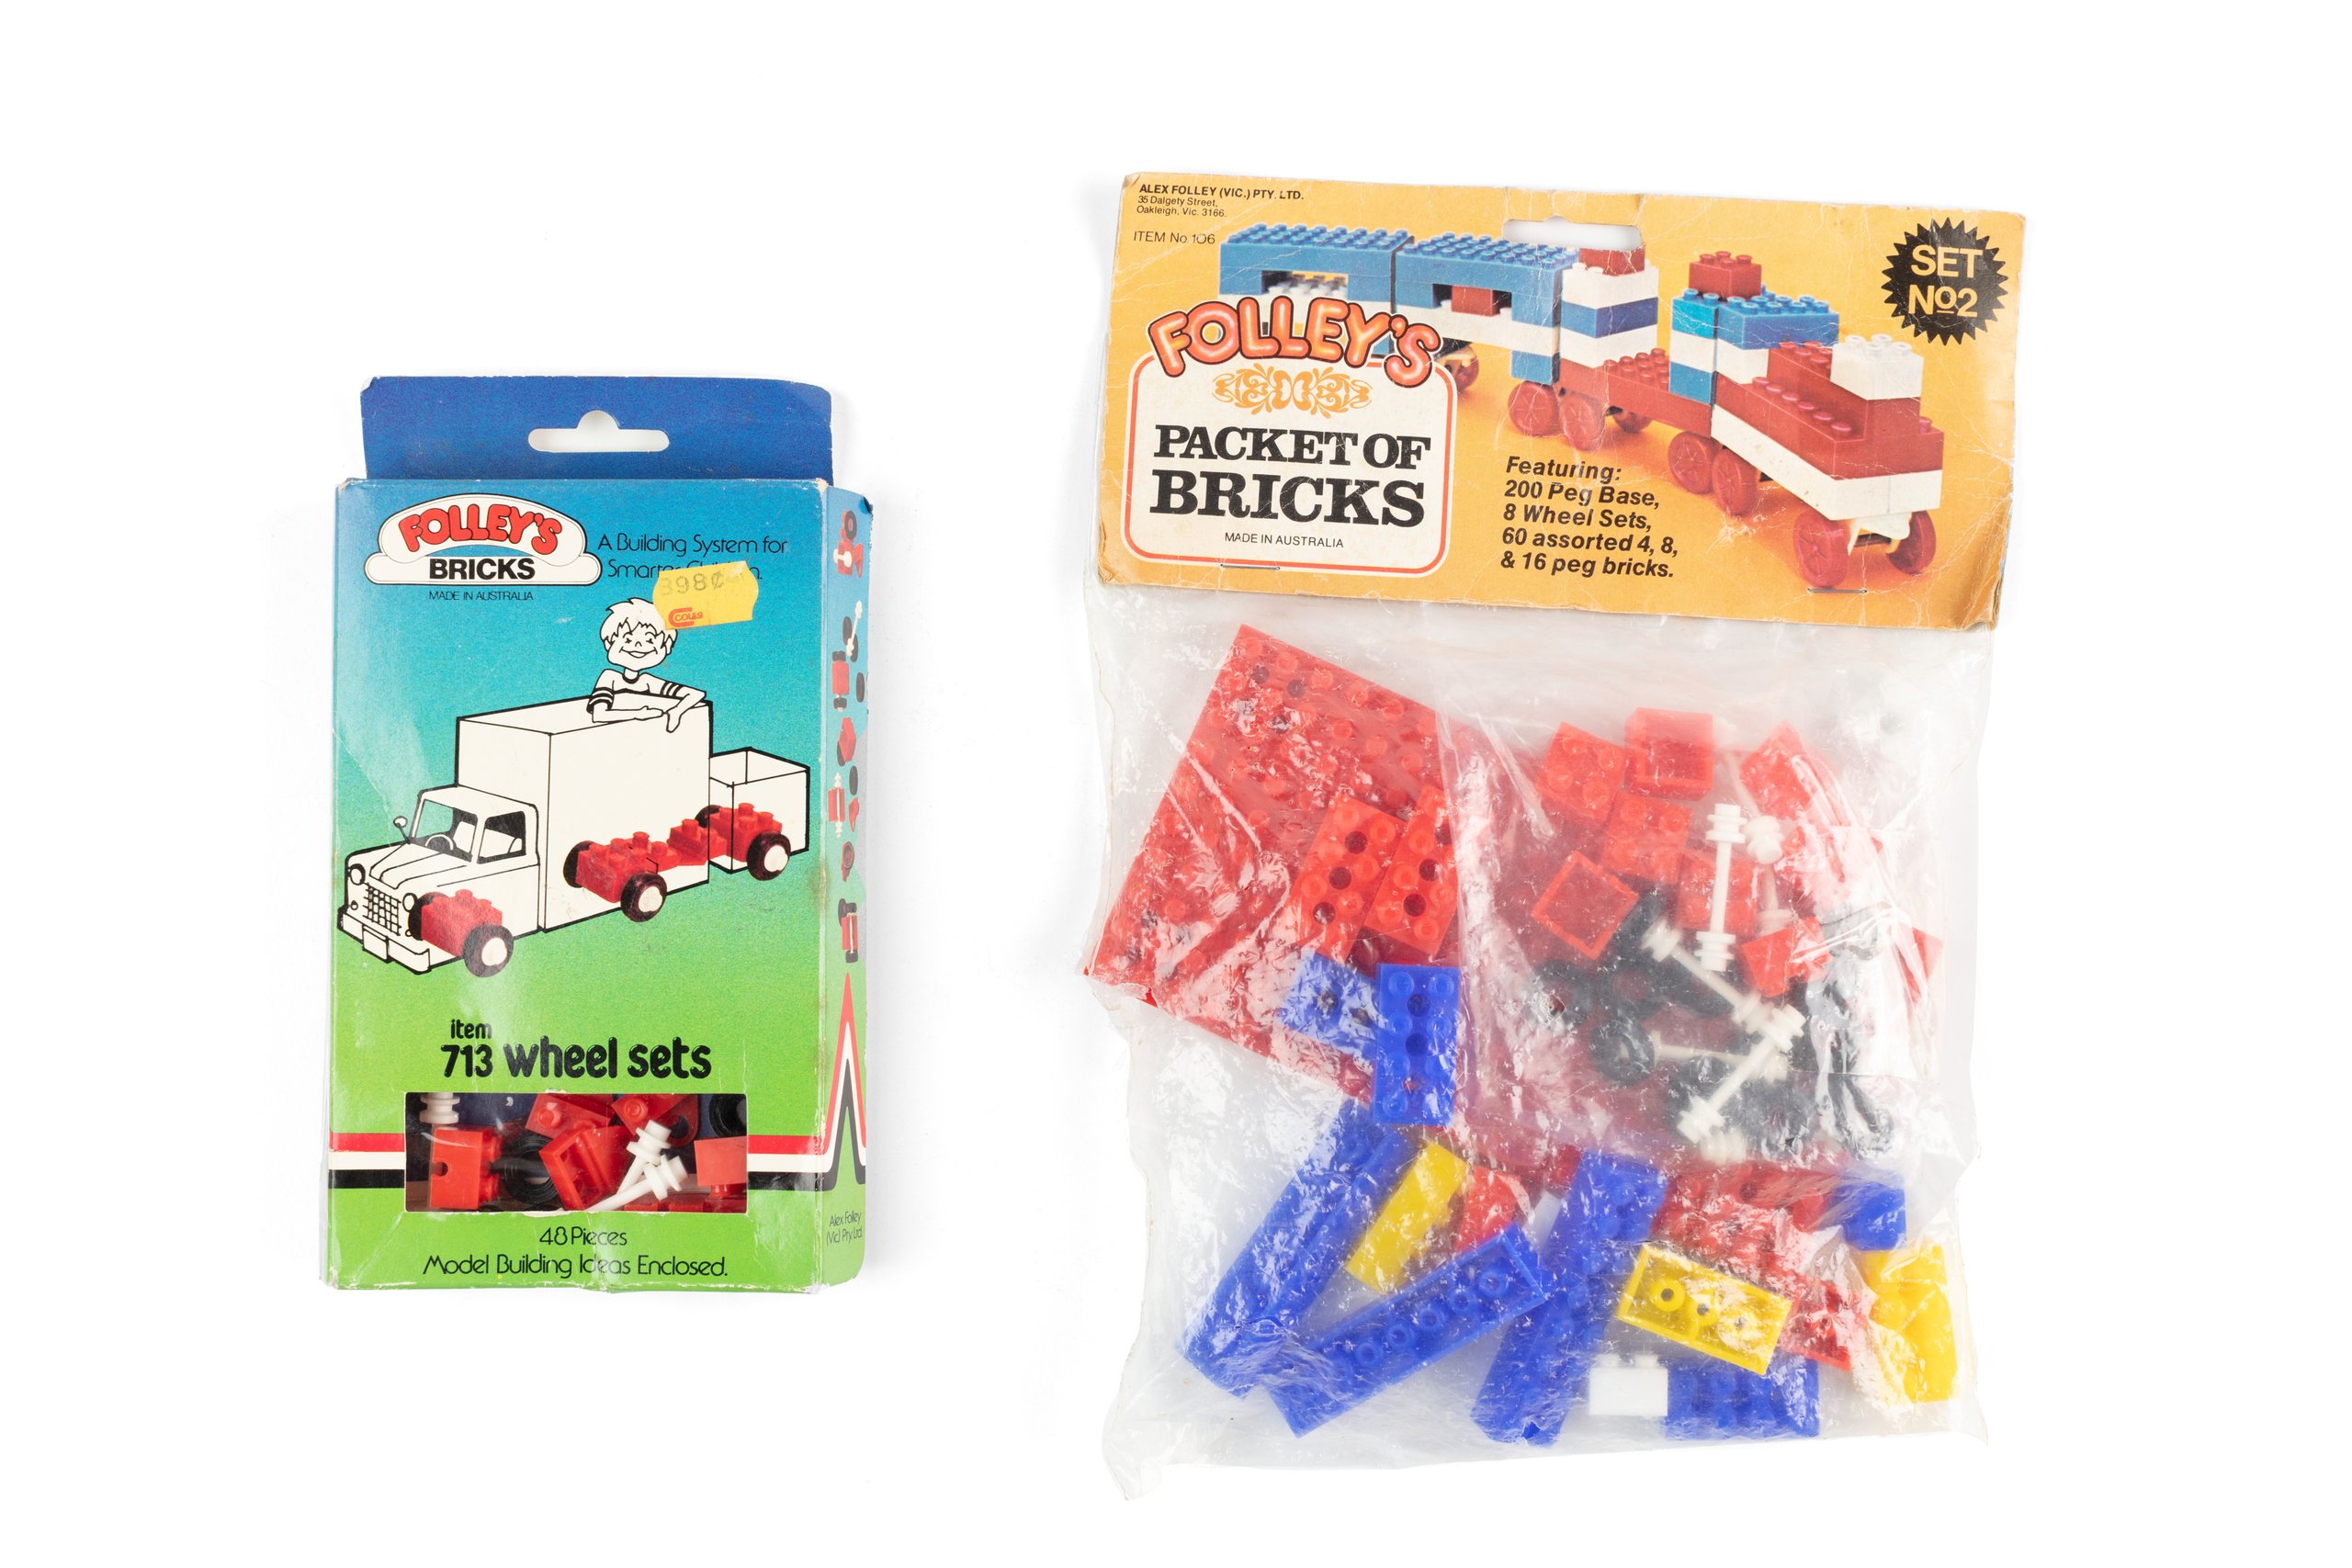 Folley's toy brick construction sets